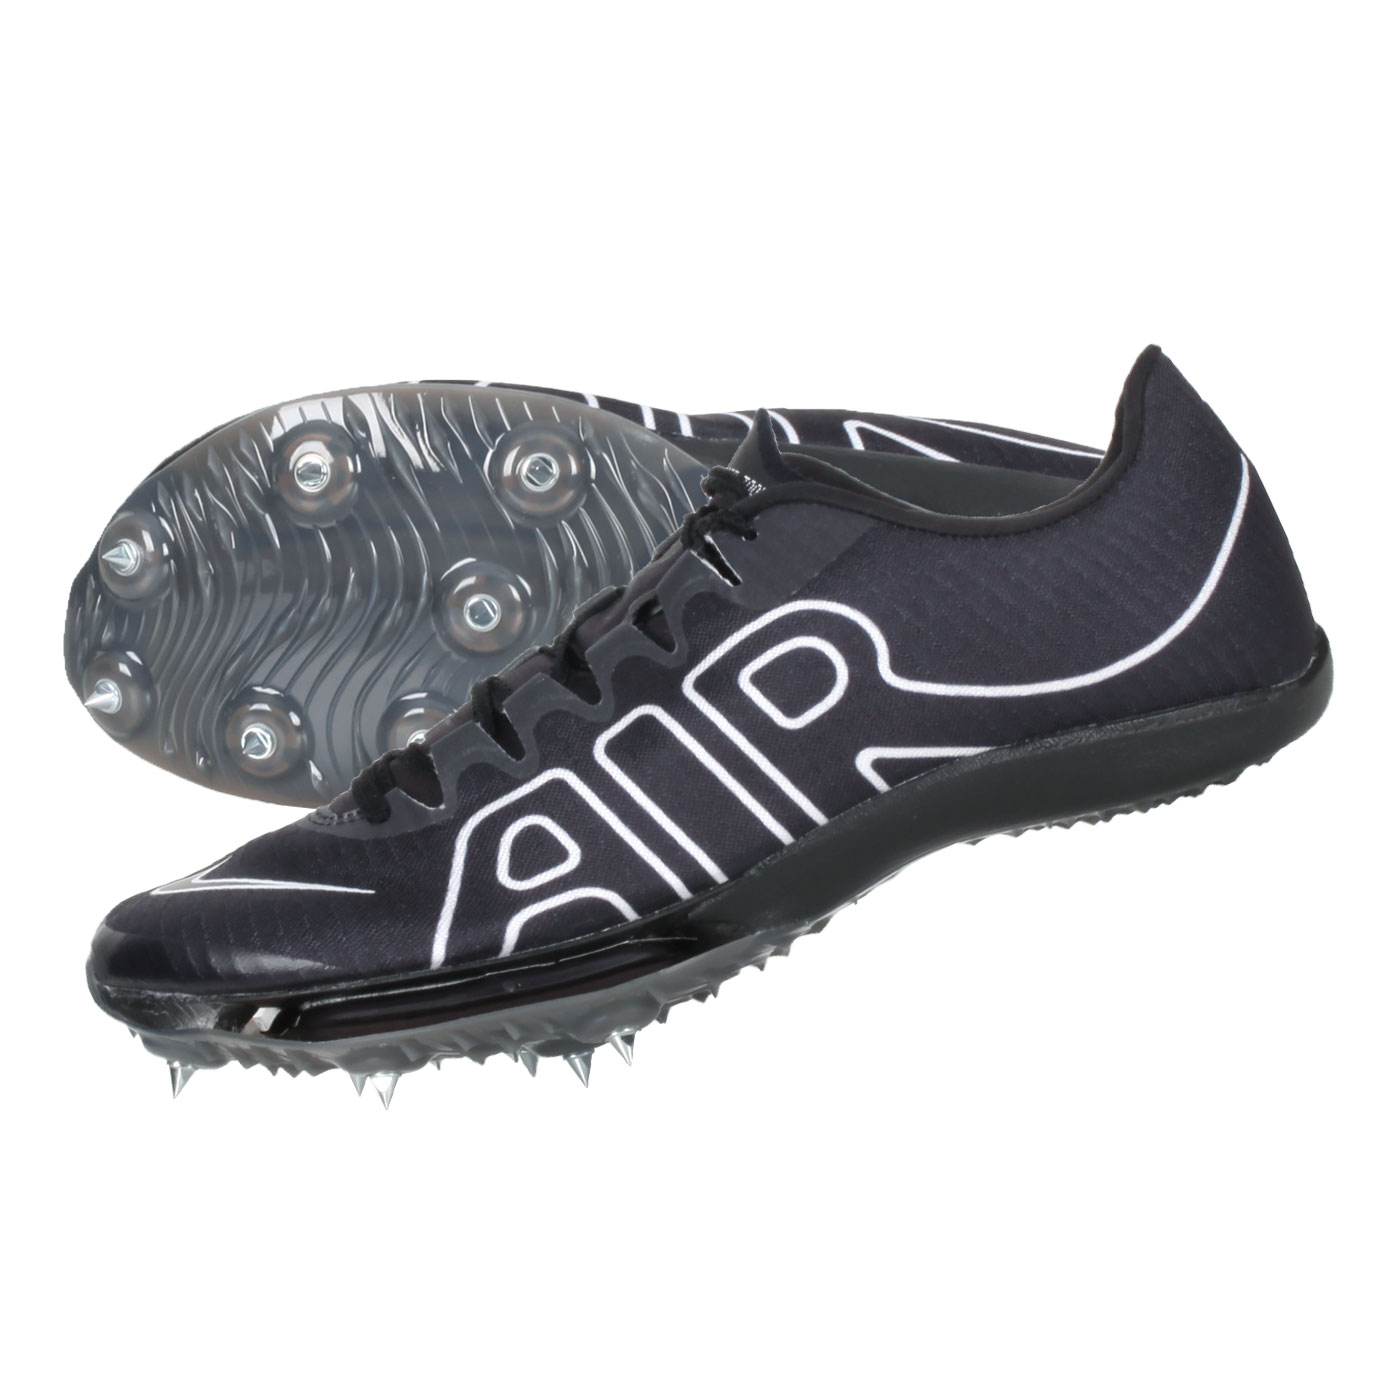 NIKE 特定-田徑氣墊釘鞋(短距離)  @AIR ZOOM MAXFLY MORE UPTEMPO DN6948-001 - 黑白